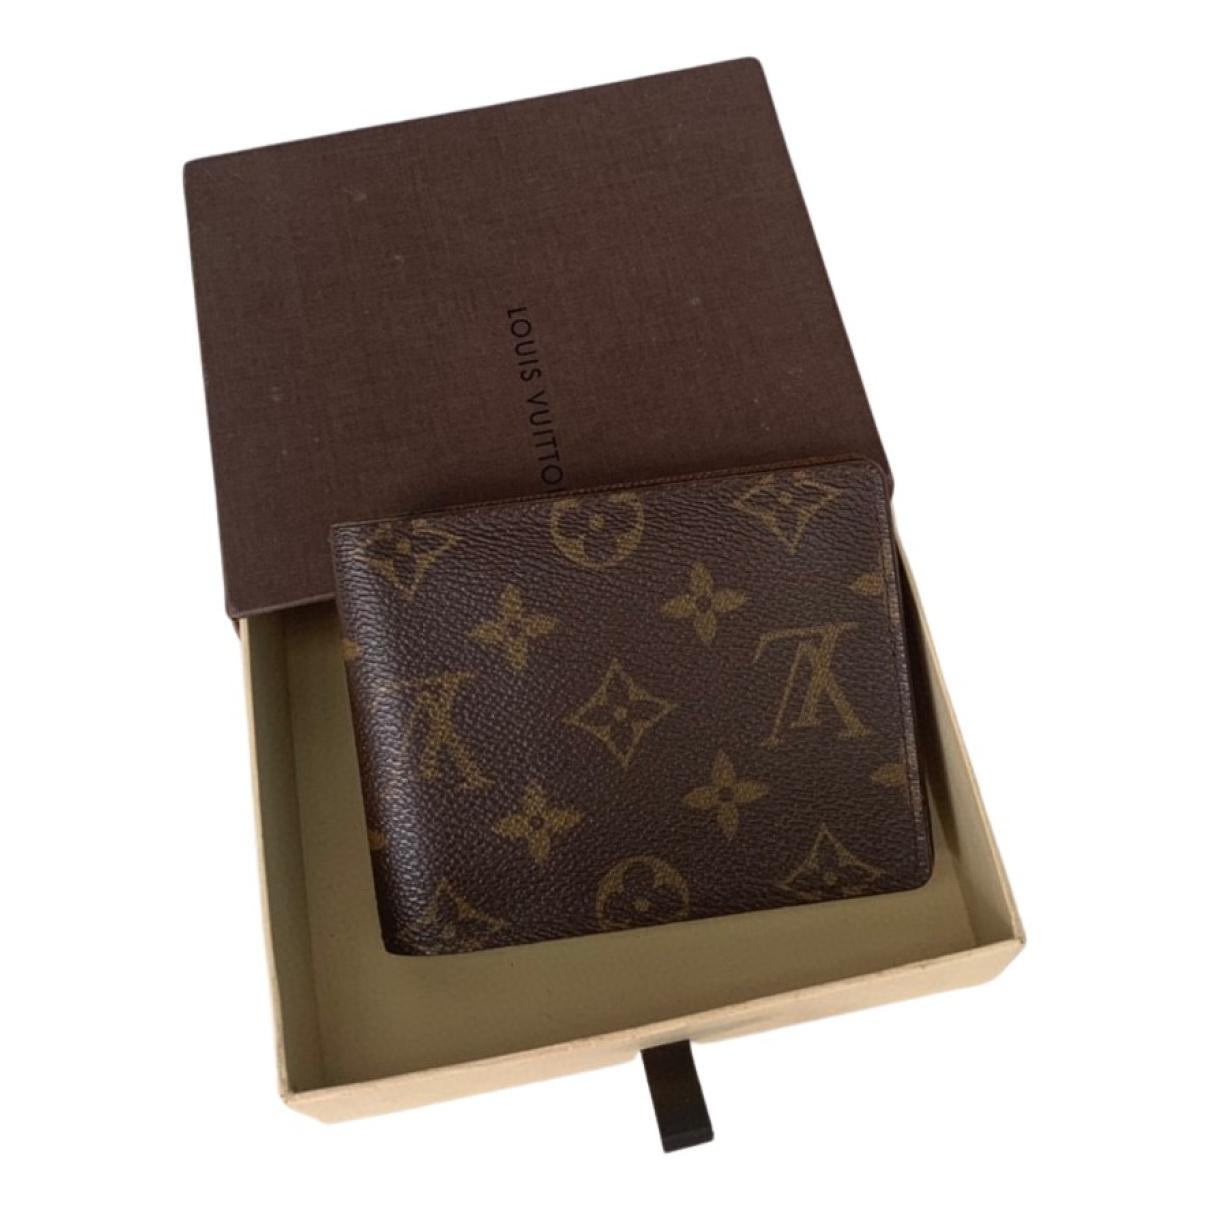 Louis Vuitton Limited Edition Passport World Traveler Roller Luggage B –  Max Pawn